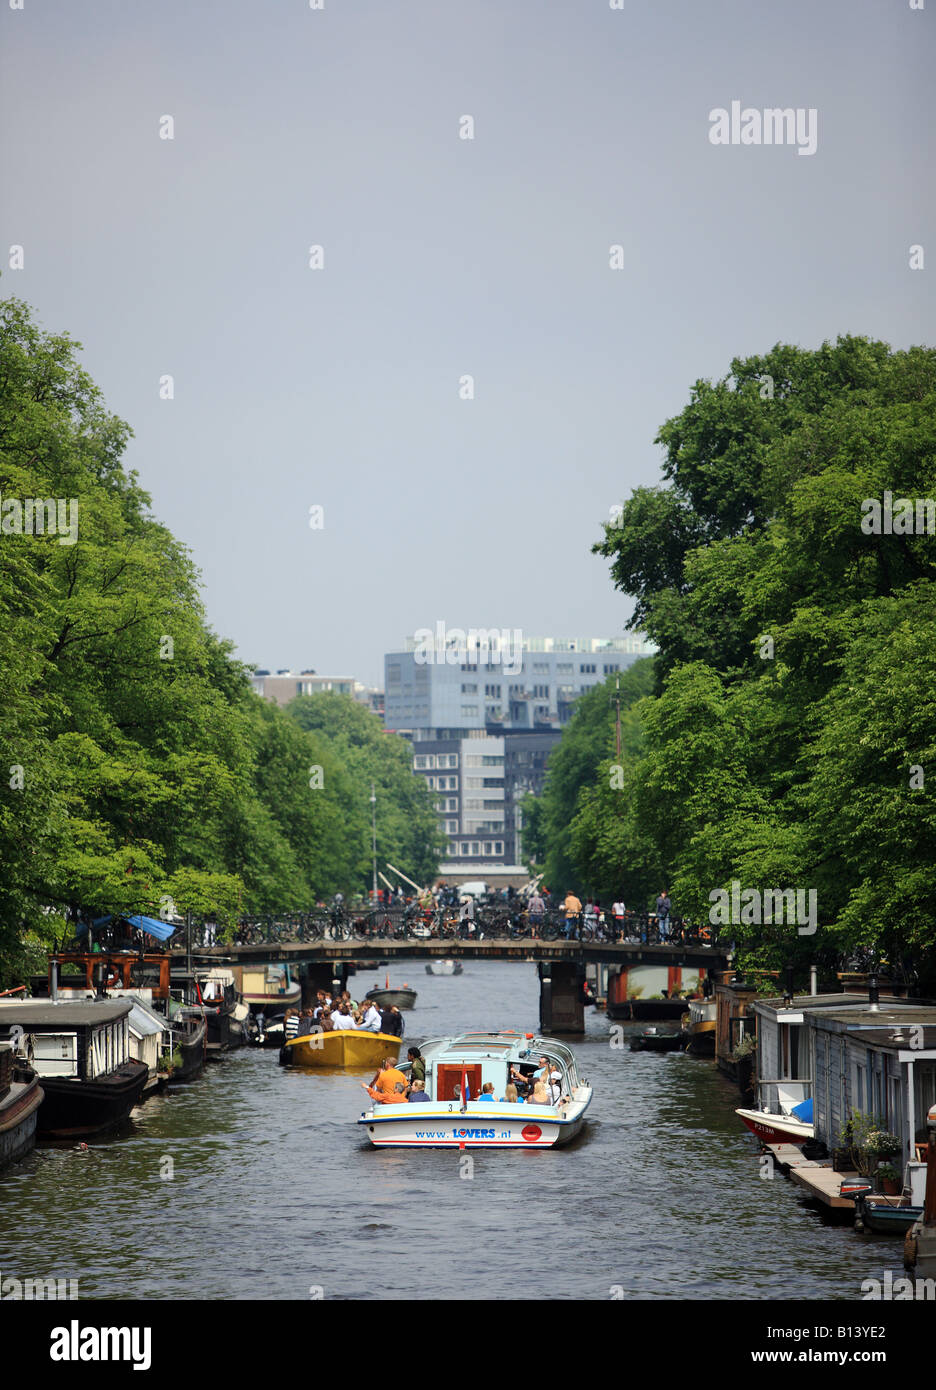 Sportboote auf dem Kanal in Amsterdam. Stockfoto